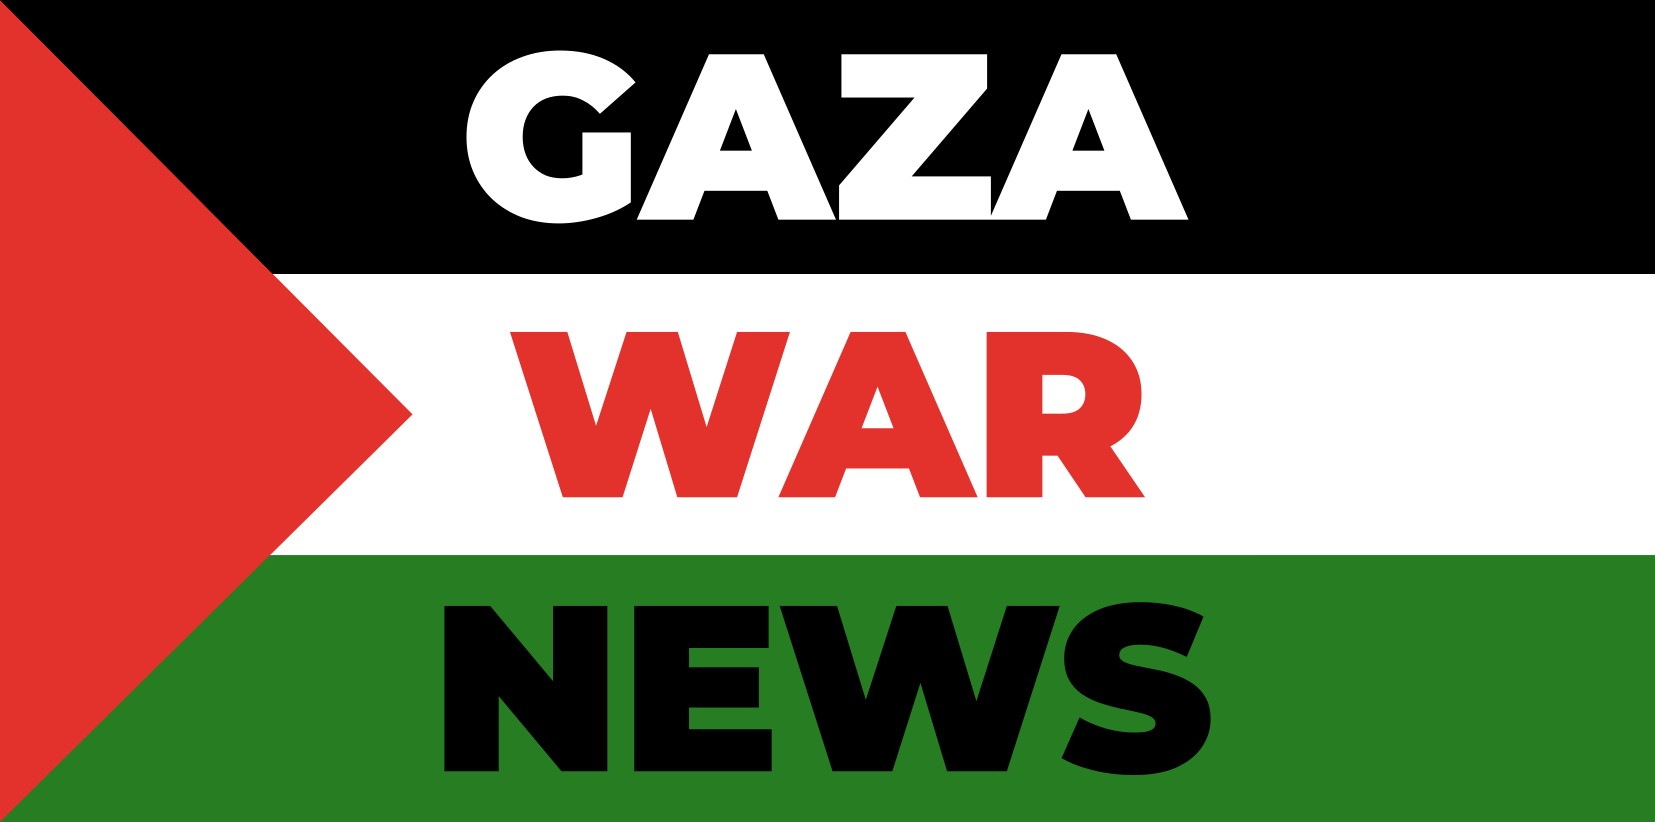 Gaza War News text on Palestinian flag